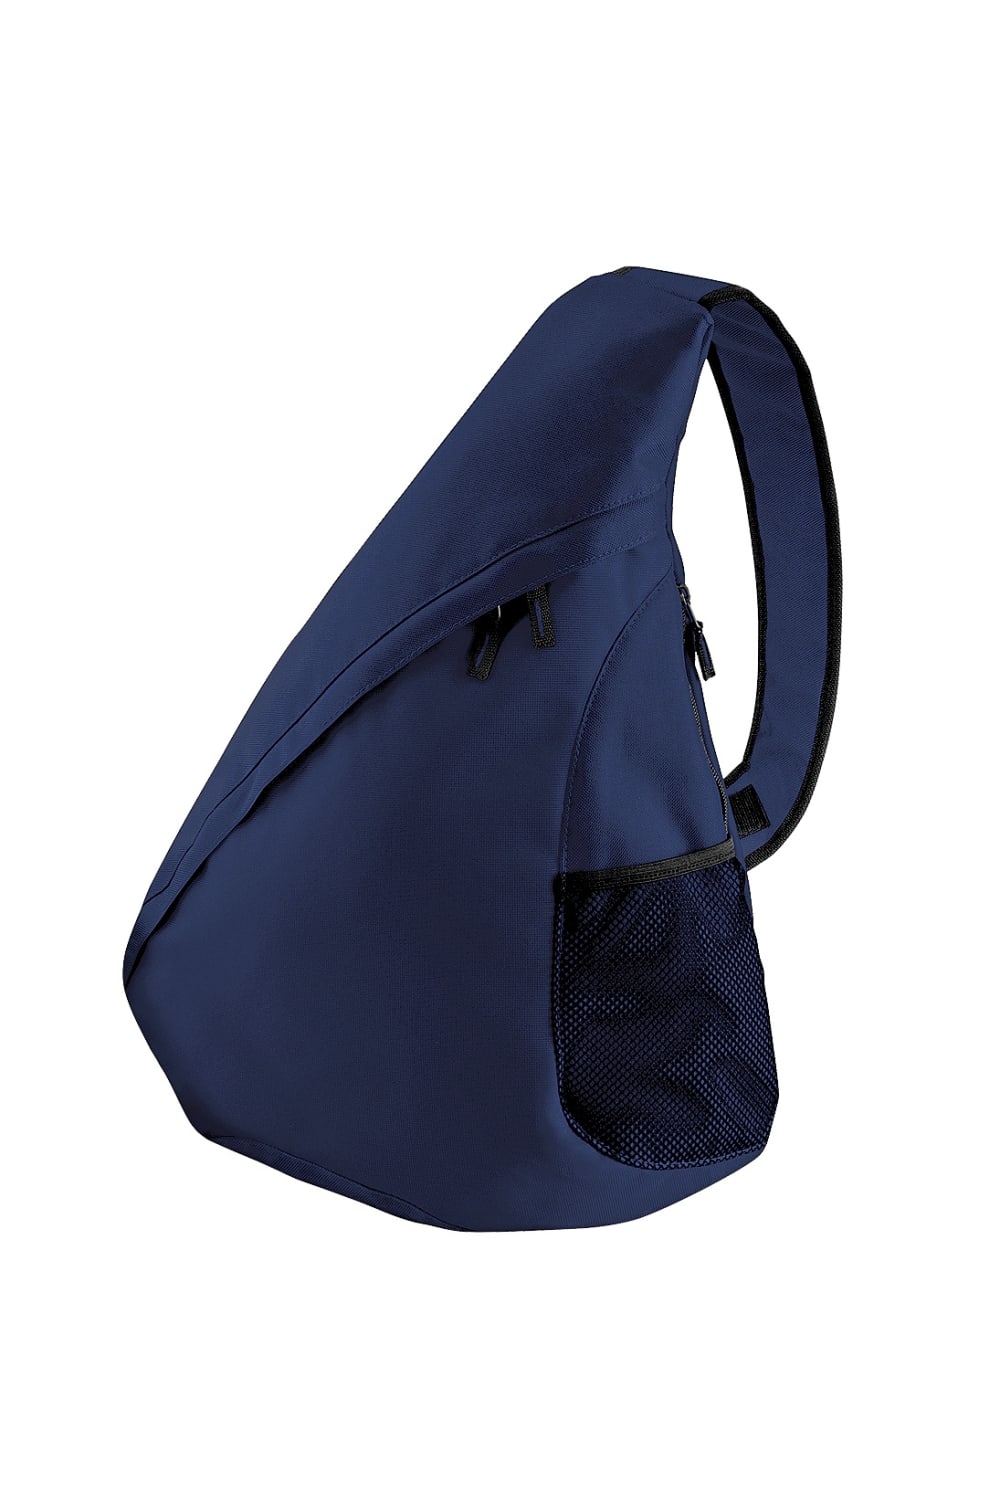 Universal Monostrap Bag / Backpack - French Navy